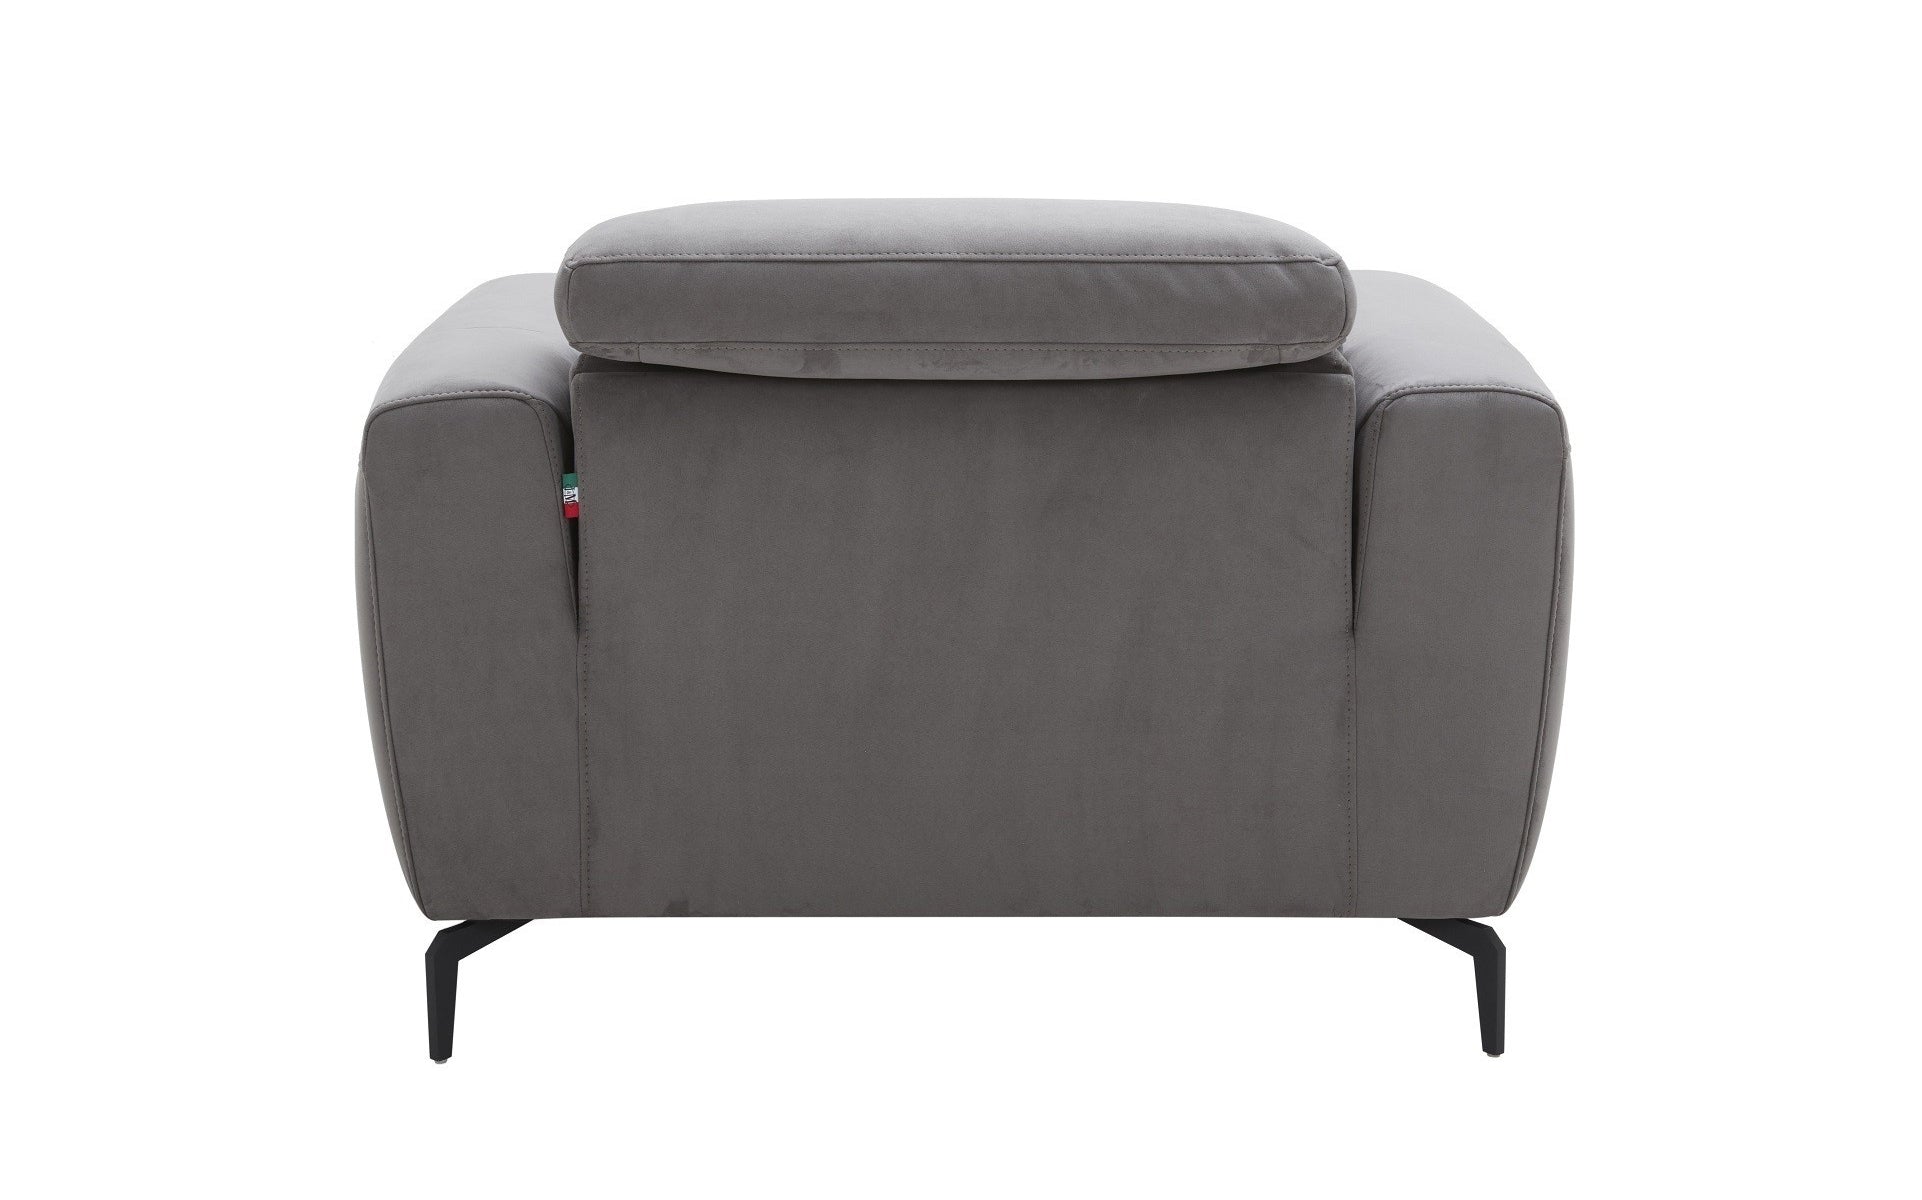 Lorenzo Motion Chair in Grey Fabric | J&M Furniture